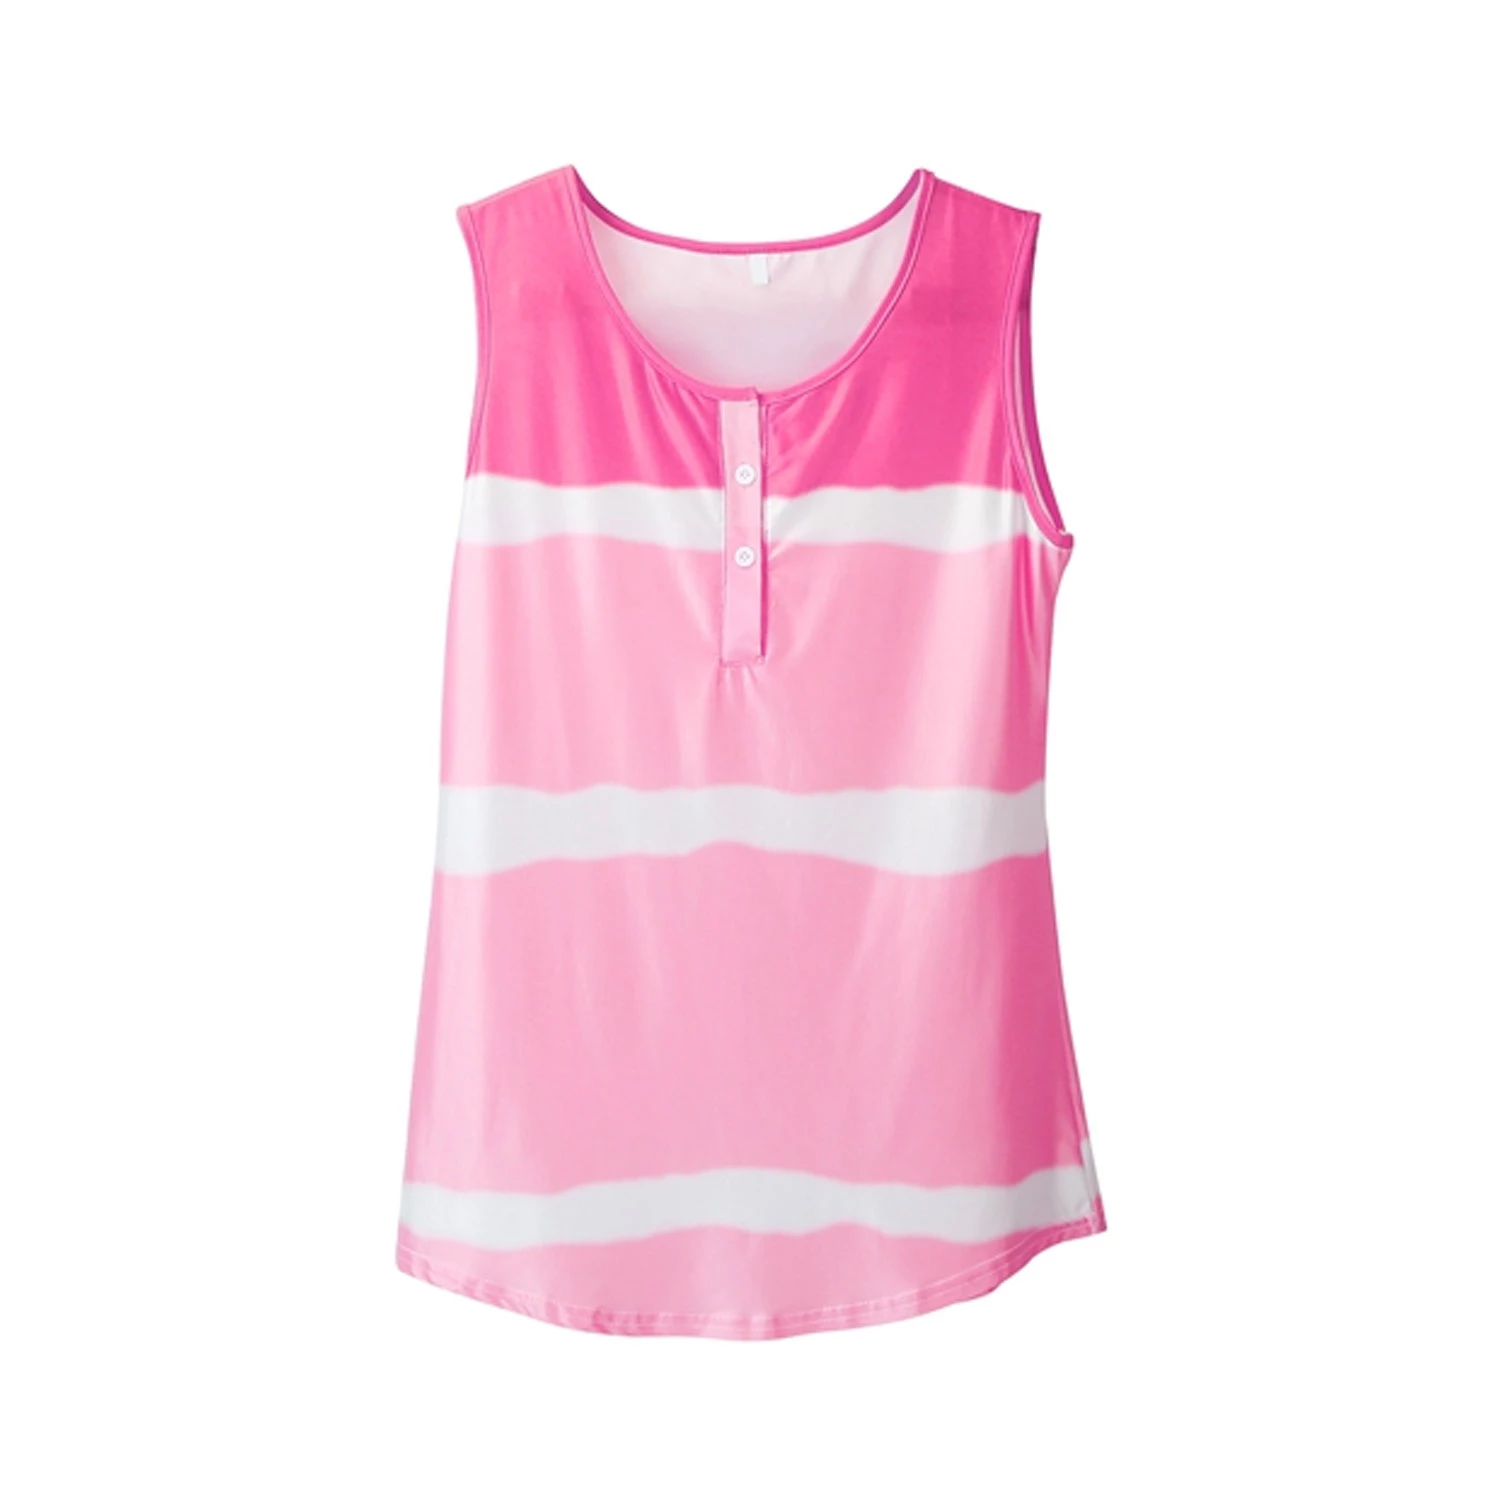 Women Tie-dye Sleeveless Tank Tops Summer Loose T Shirts Tops Button Down Shirts Vest Blouse